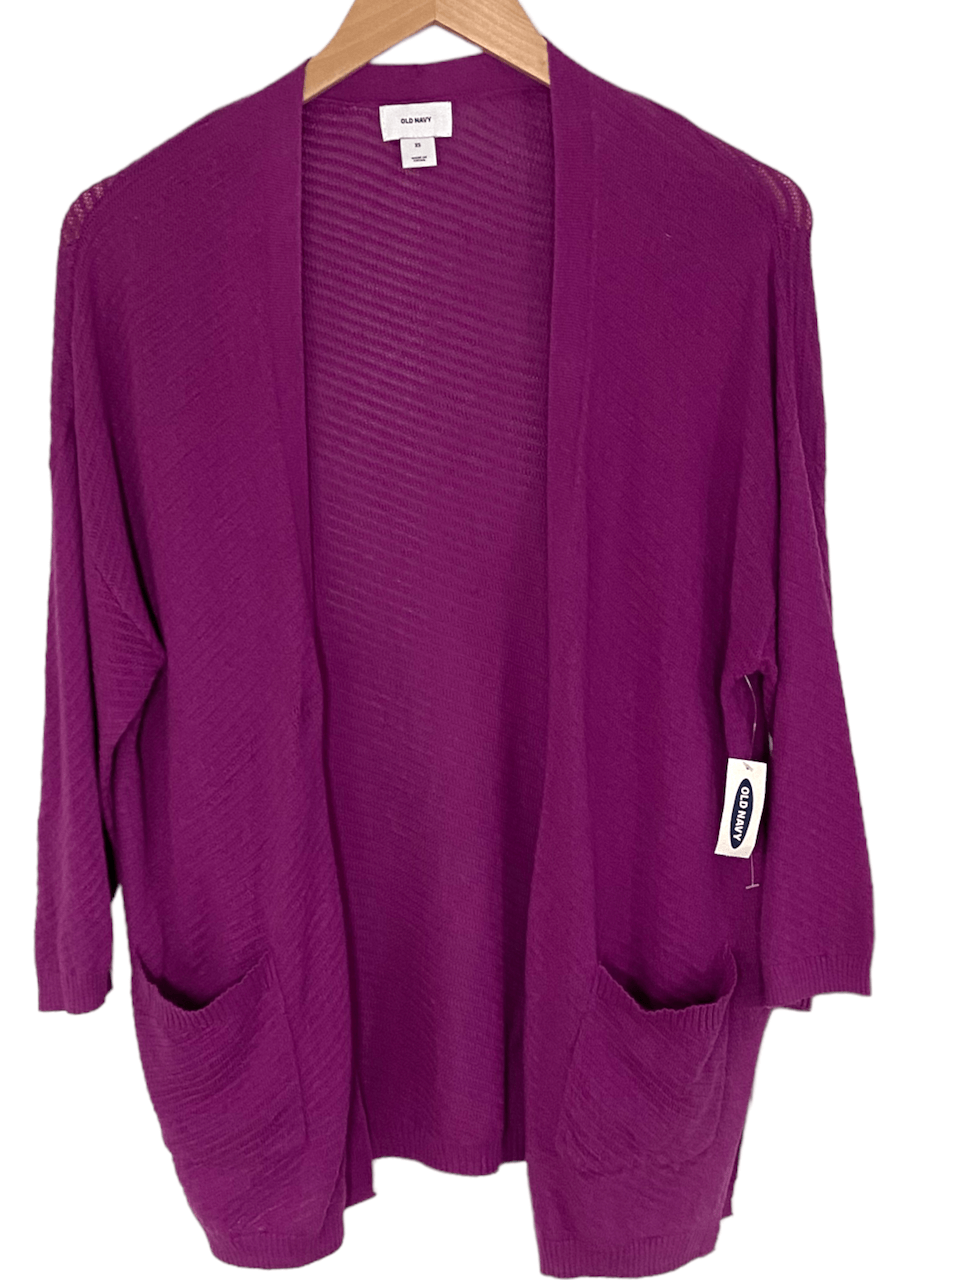 Urban Dolman Sweater  Heather Grey - Lavender & Lace Boutique